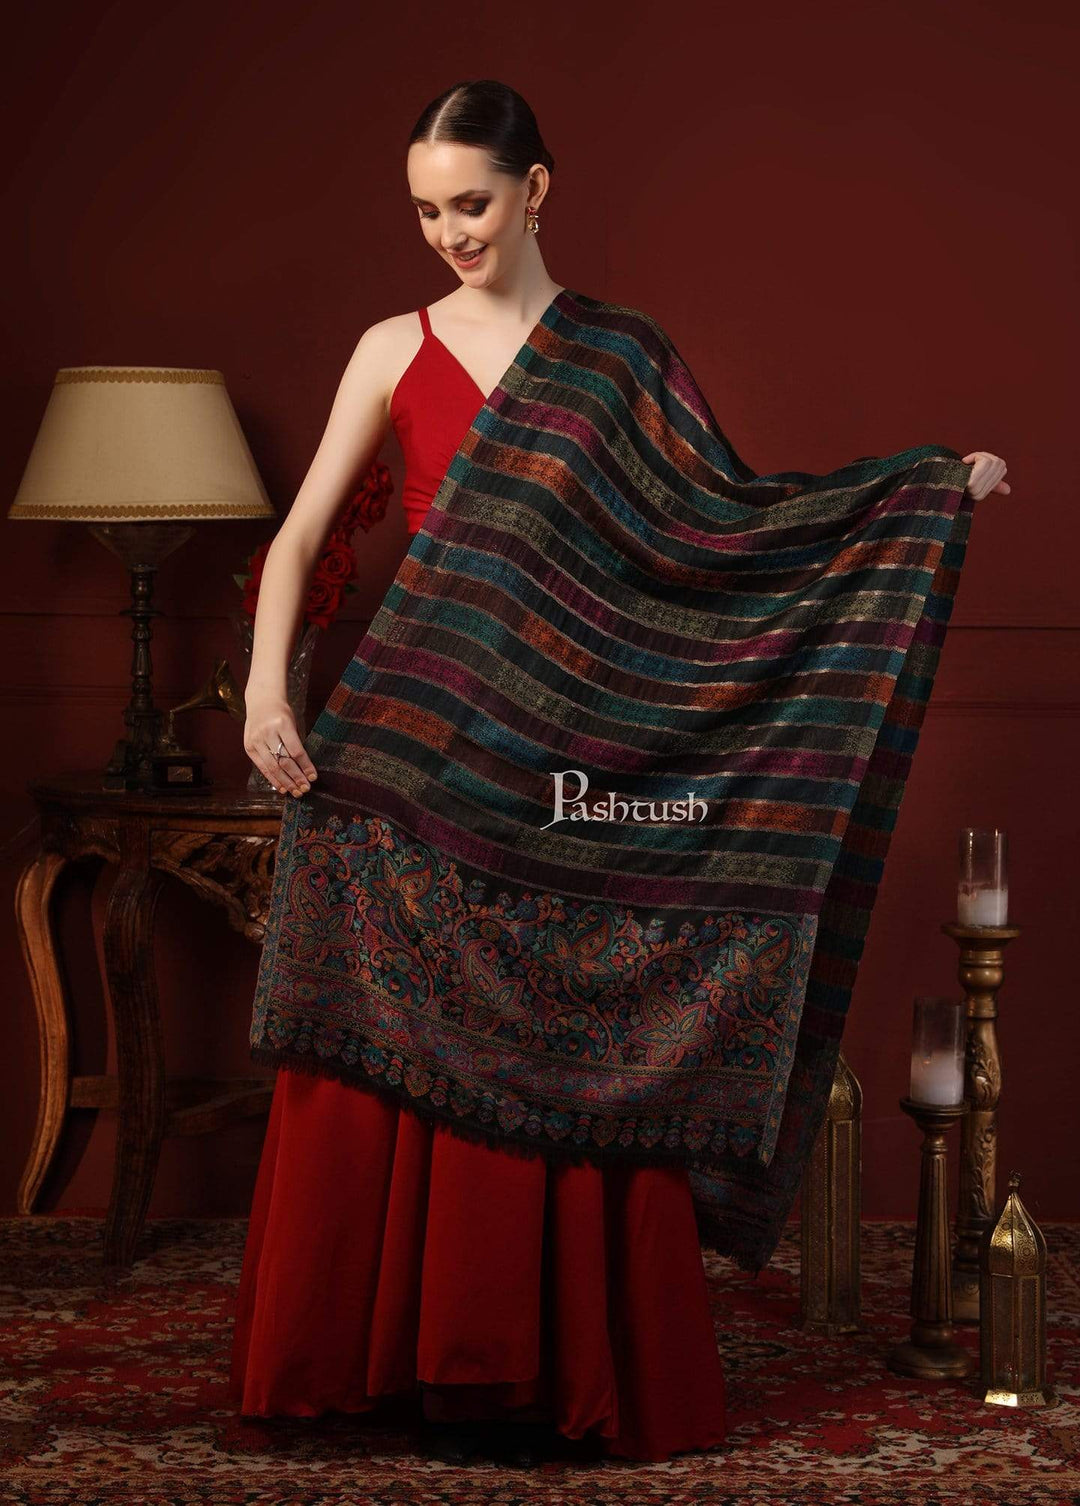 Pashtush India 100x200 Pashutsh Womens Twilight Striped Shawl, With Shimmery Zari Thread Weave